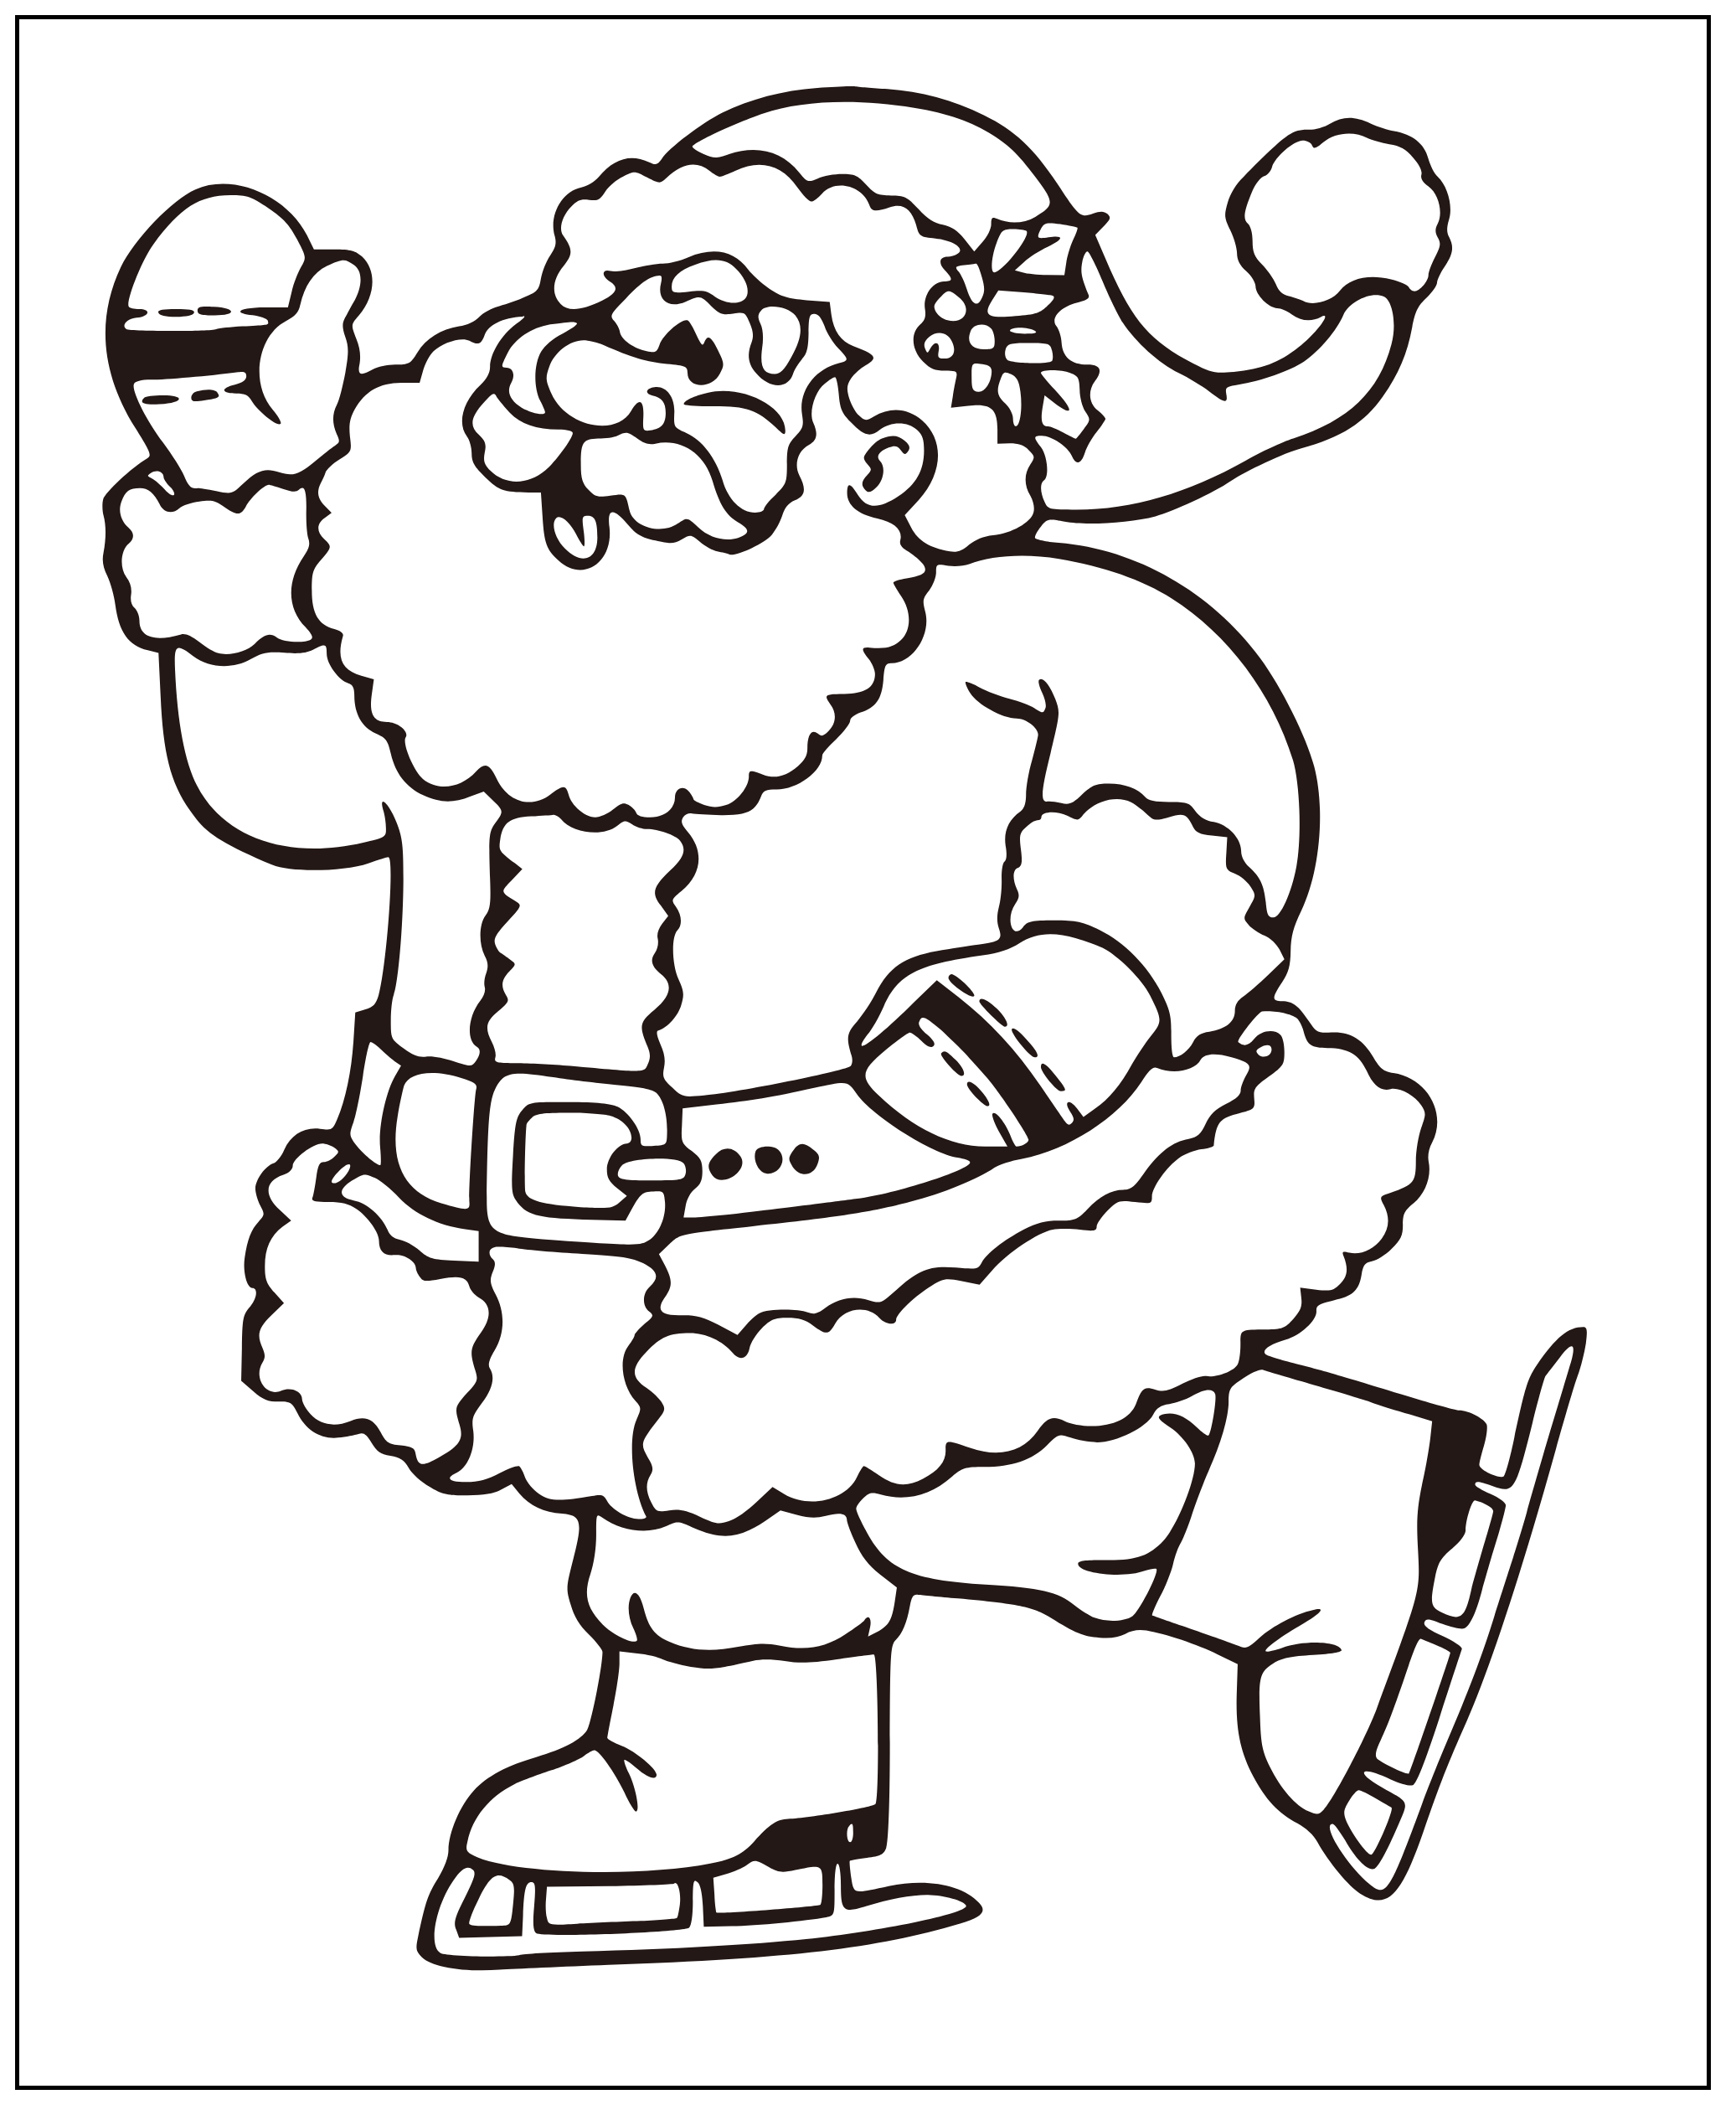 Printable Santa running Coloring Page for kids.